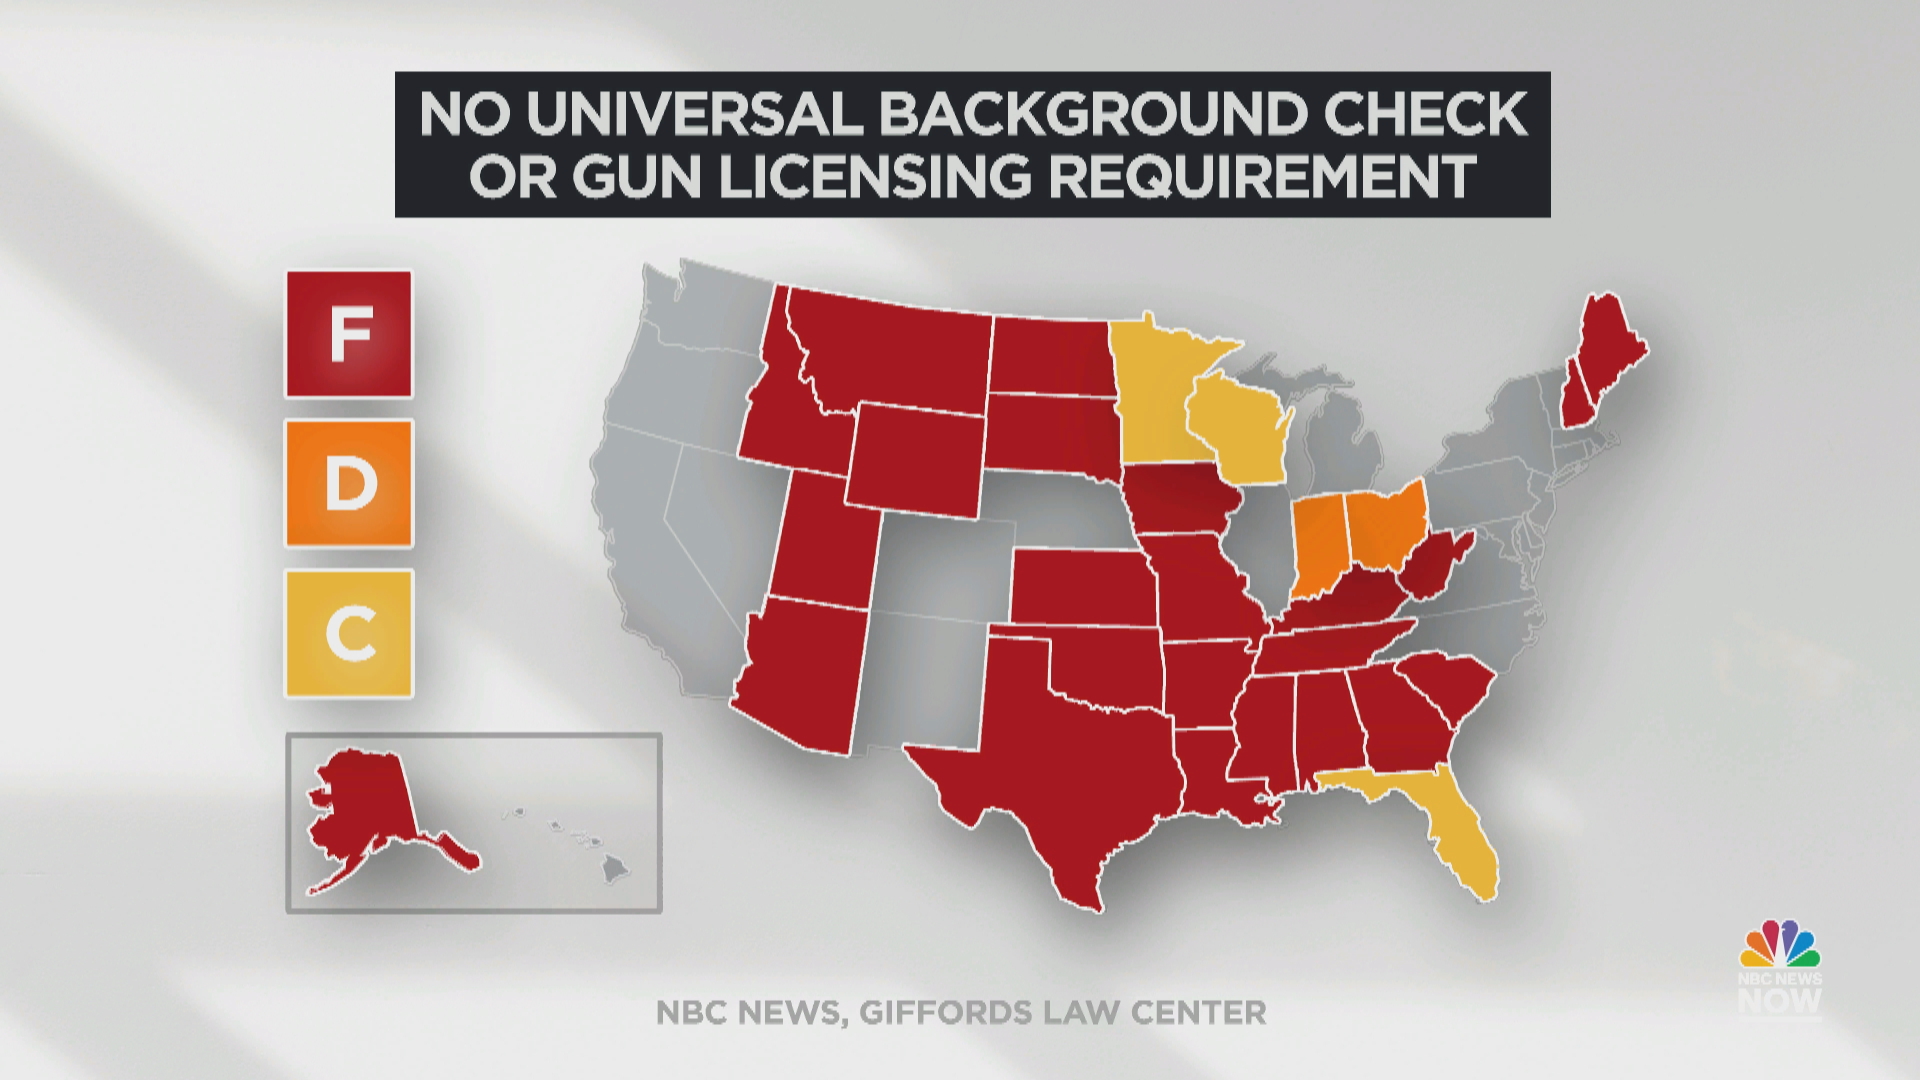 Universal background checks, gun licenses not required in 30 states